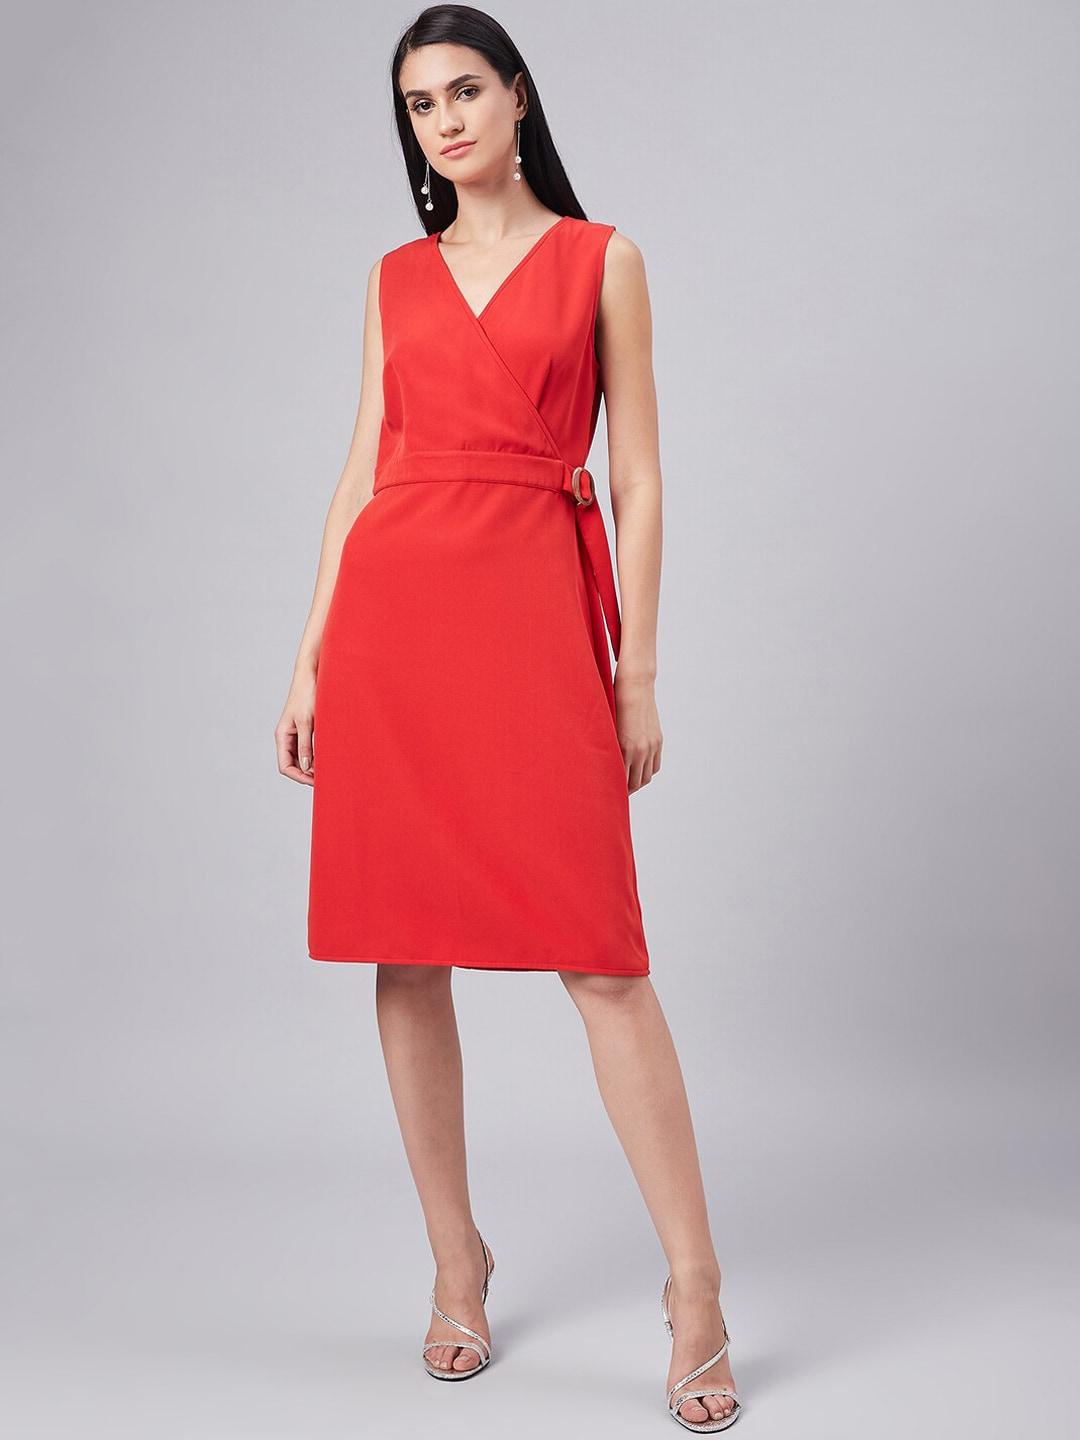 Carlton London Women Red Solid A-Line Dress